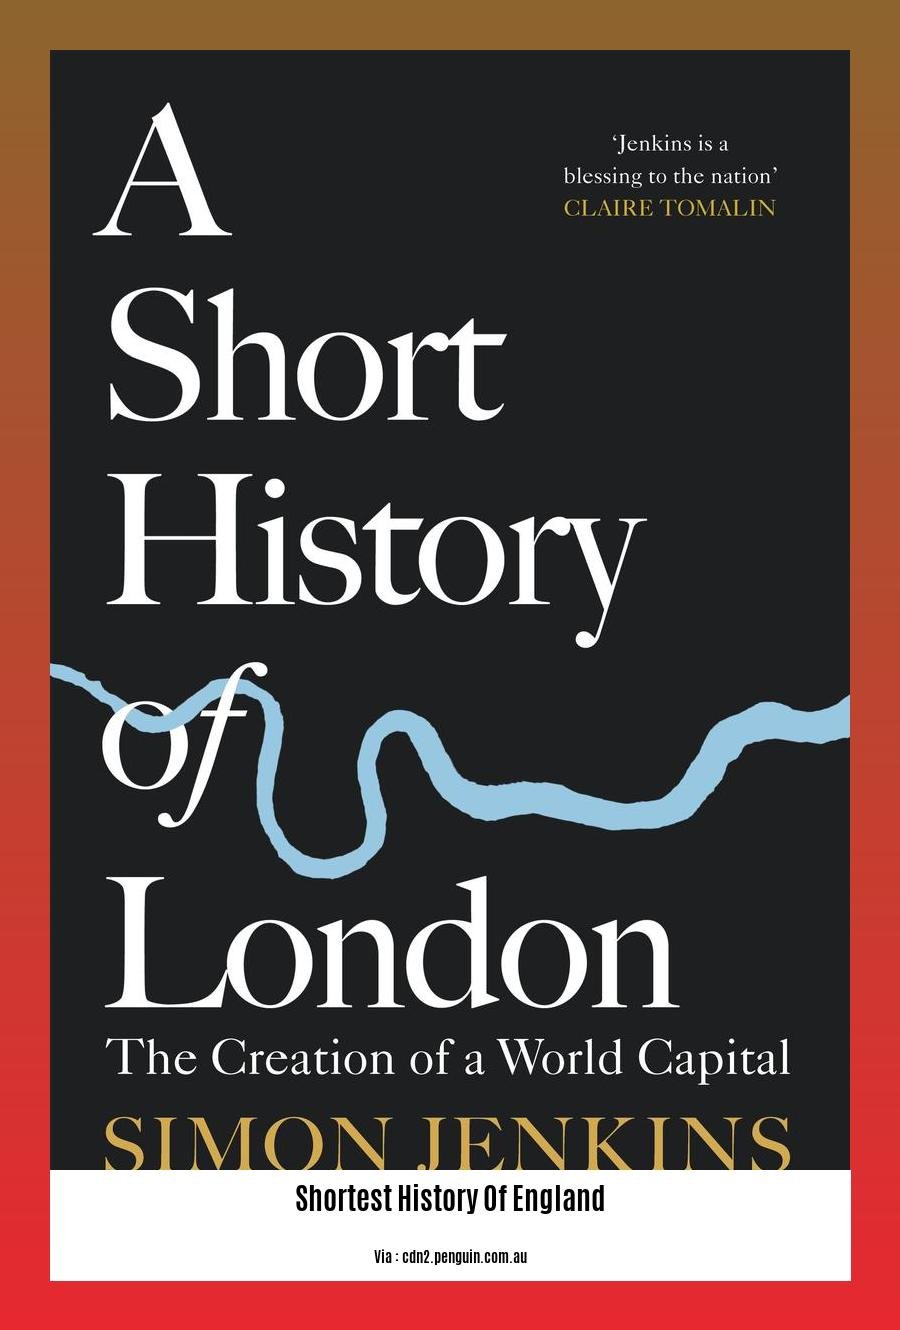 shortest history of england